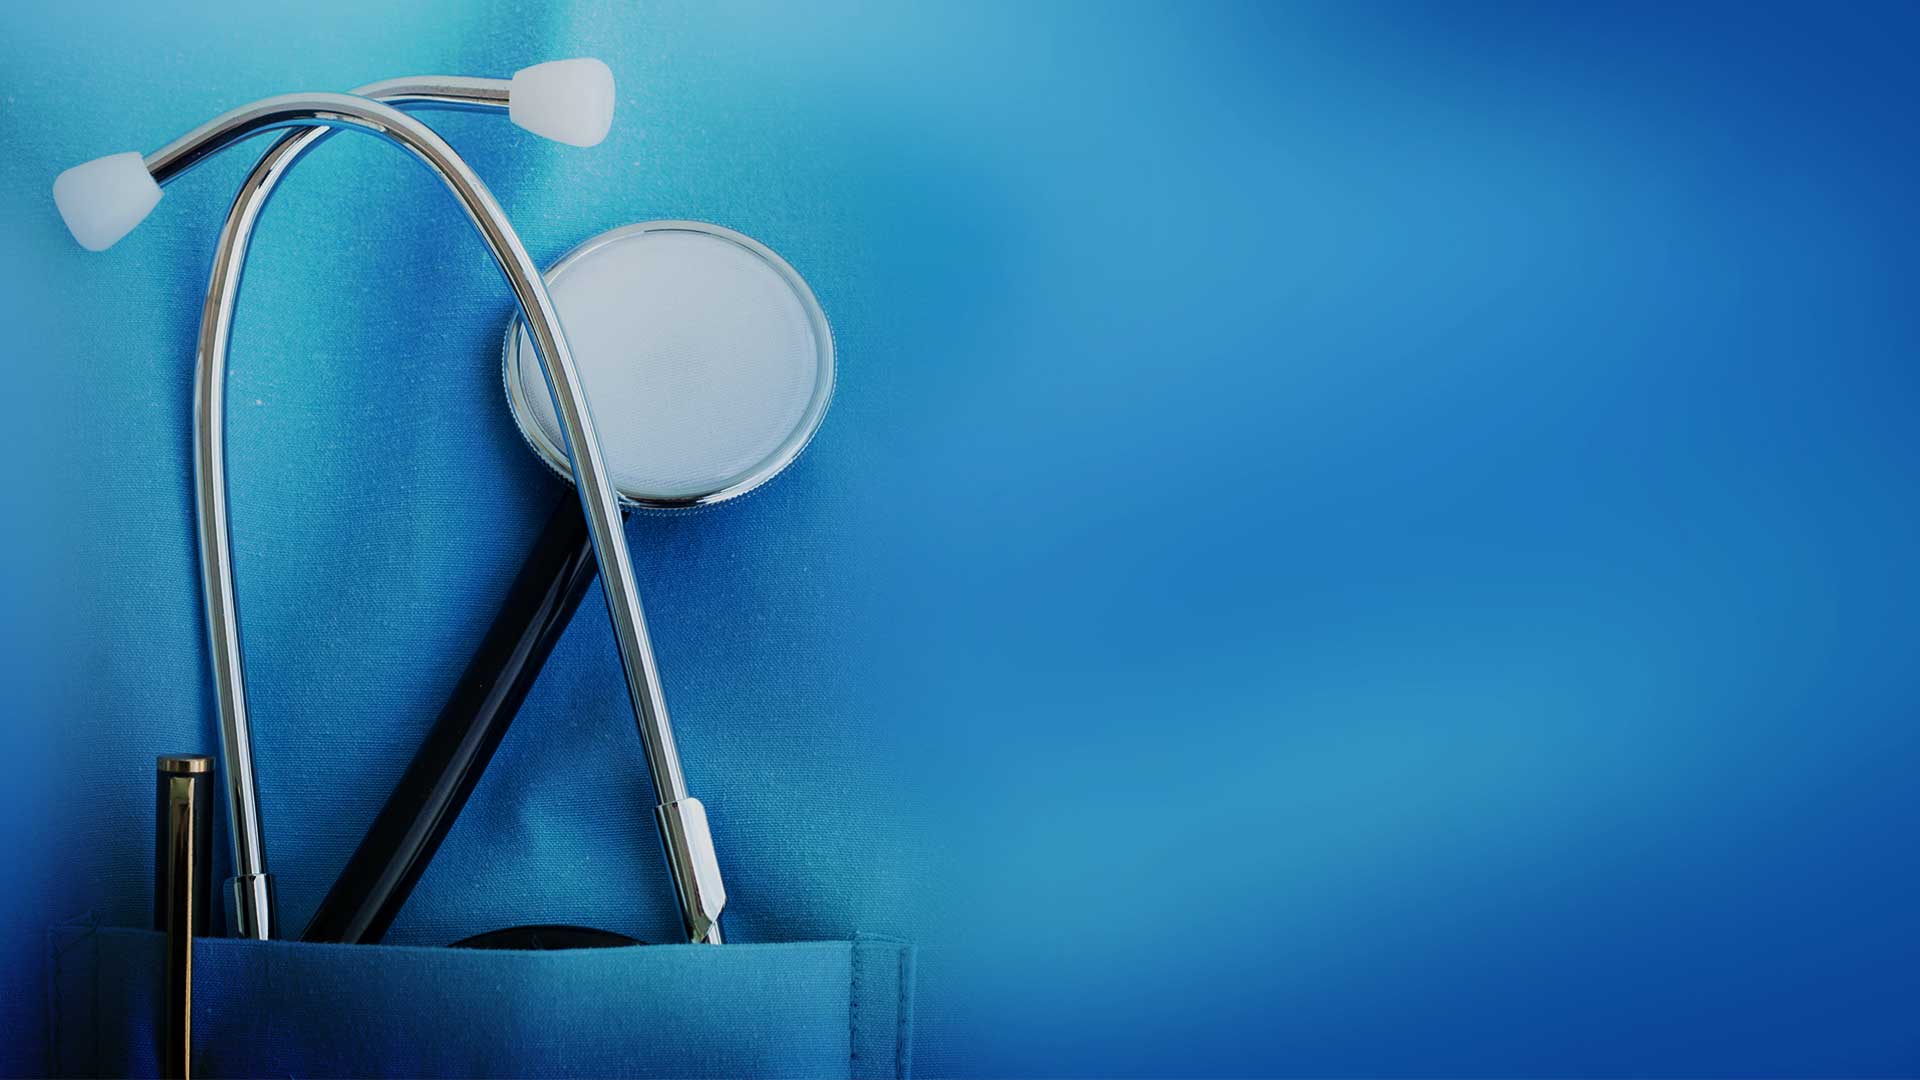 Us Health Care Panies Begin Exploring Blockchain Technologies